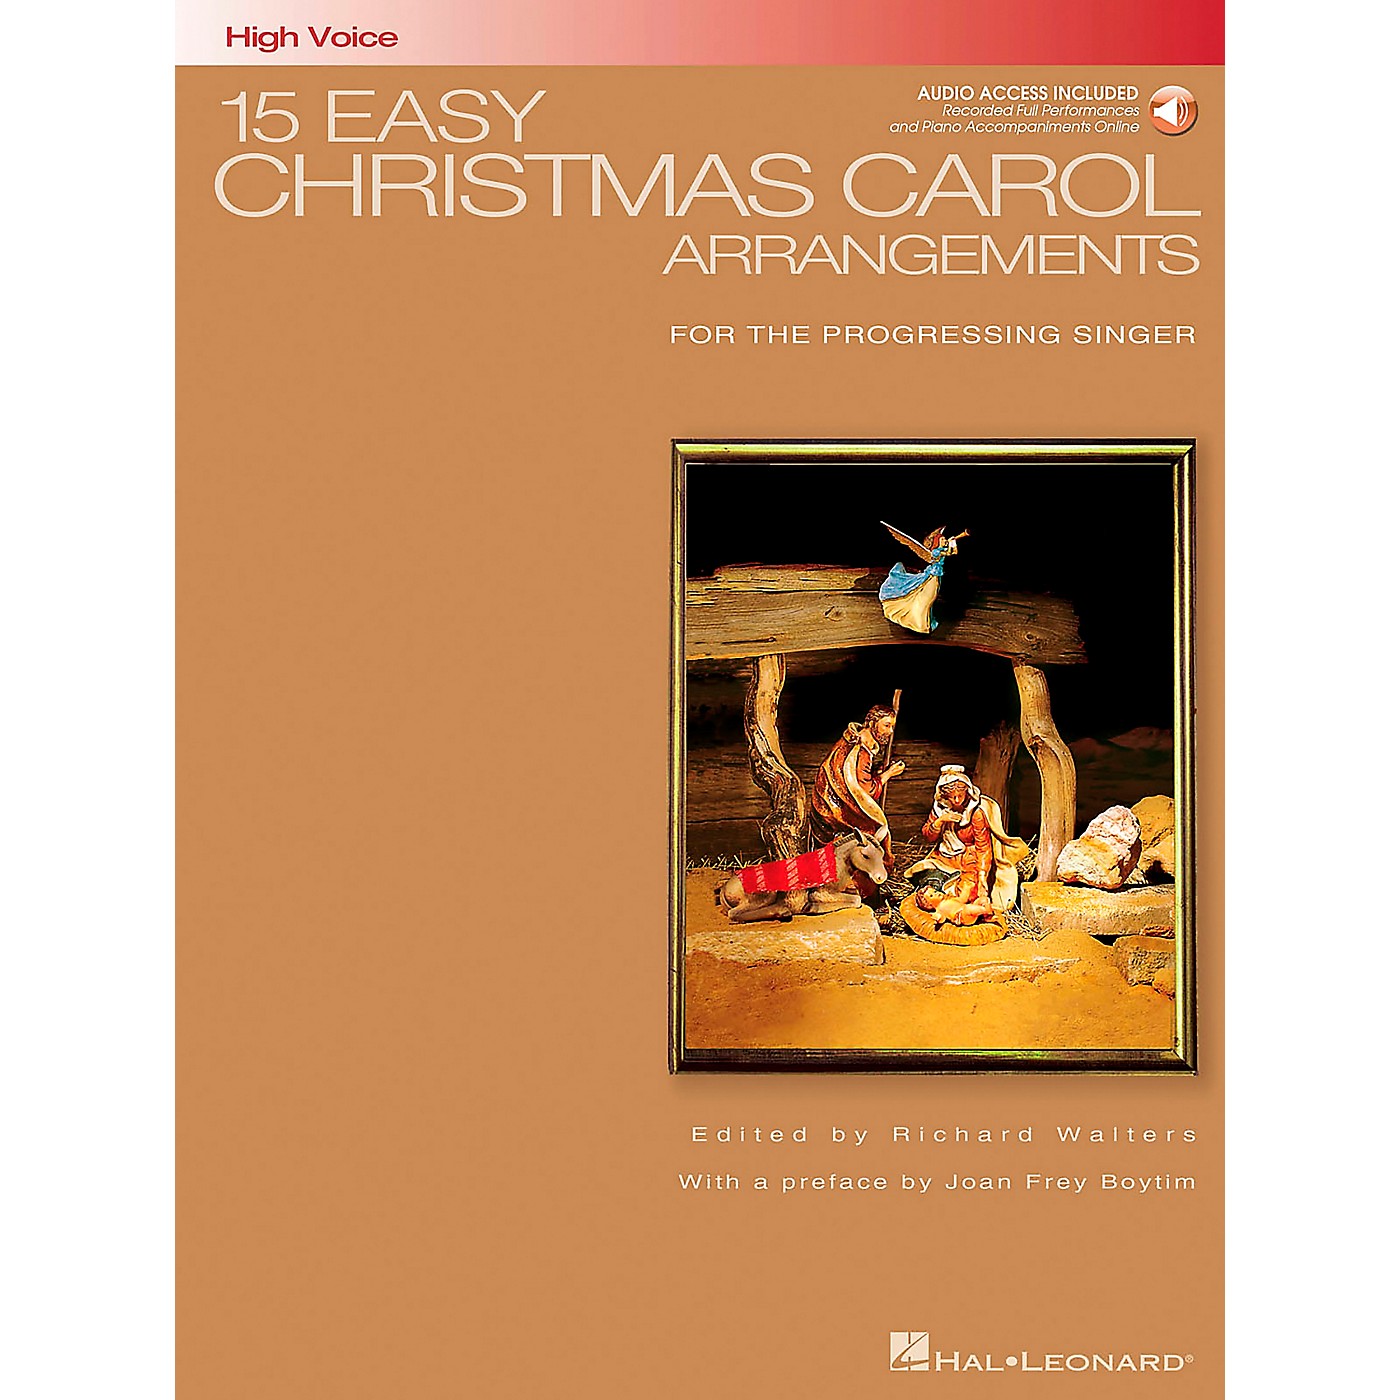 Hal Leonard 15 Easy Christmas Carol Arrangements for High Voice Book/CD thumbnail